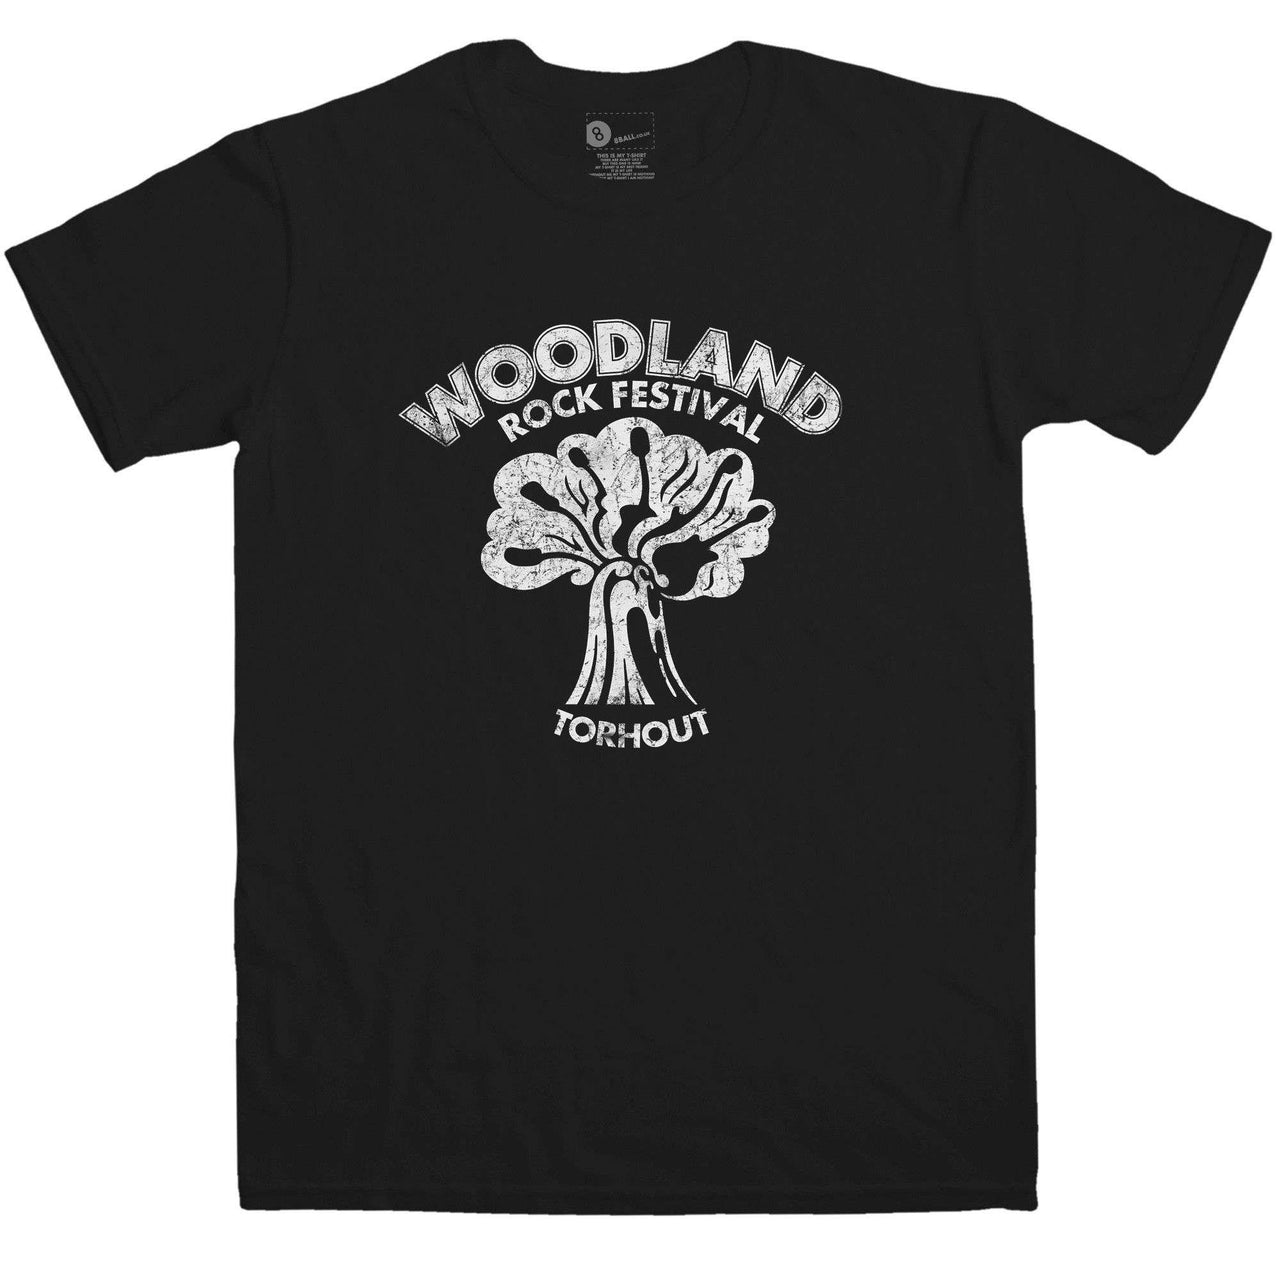 Woodland Rock Festival Unisex T-Shirt As Worn By Joan Jett 8Ball